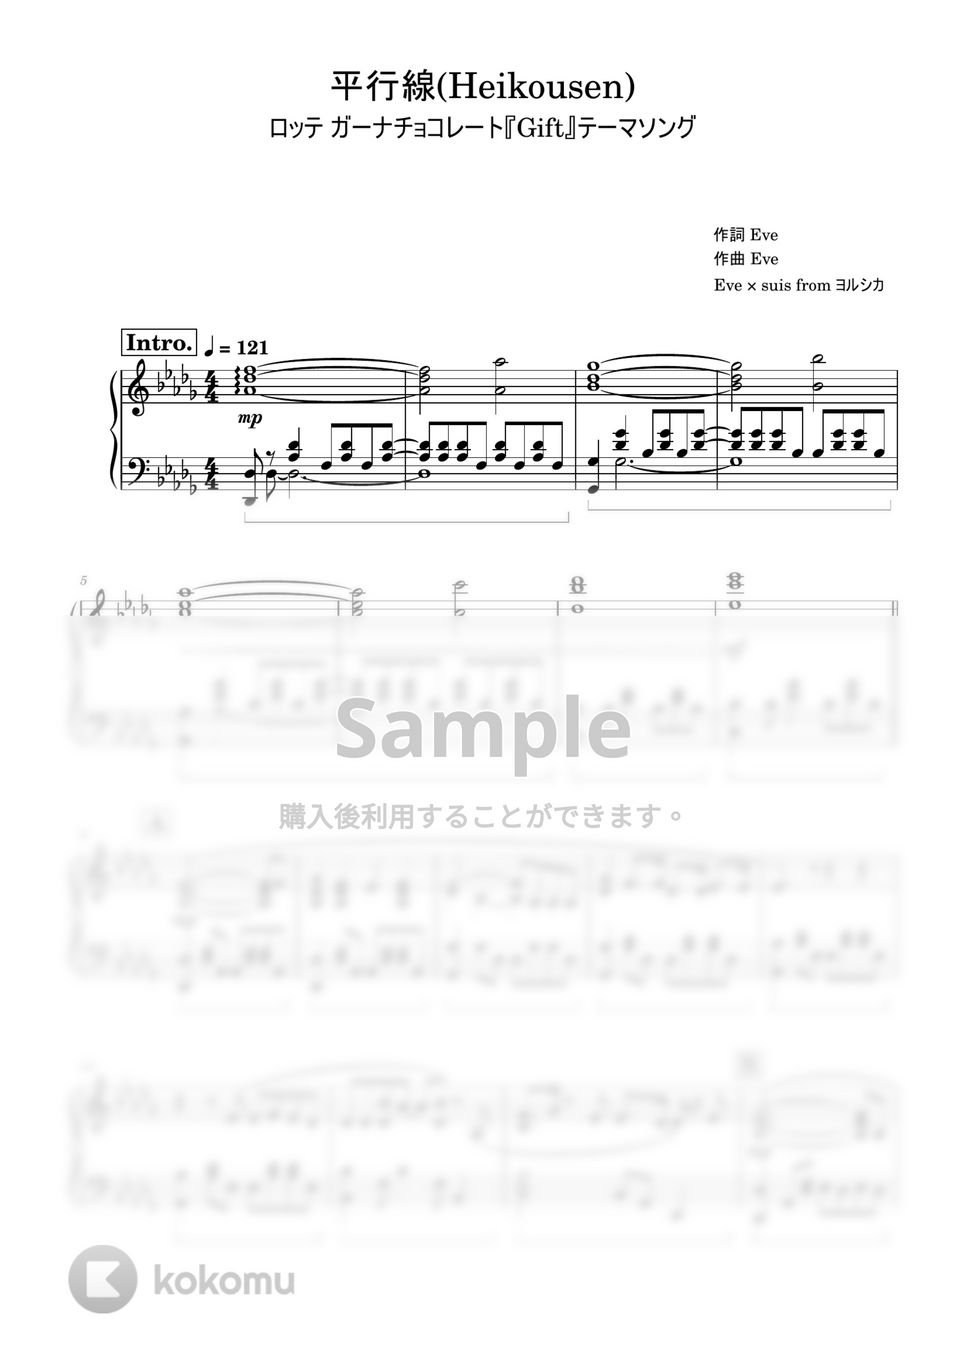 Eve × suis from ヨルシカ - 平行線 (上級) by Saori8Piano